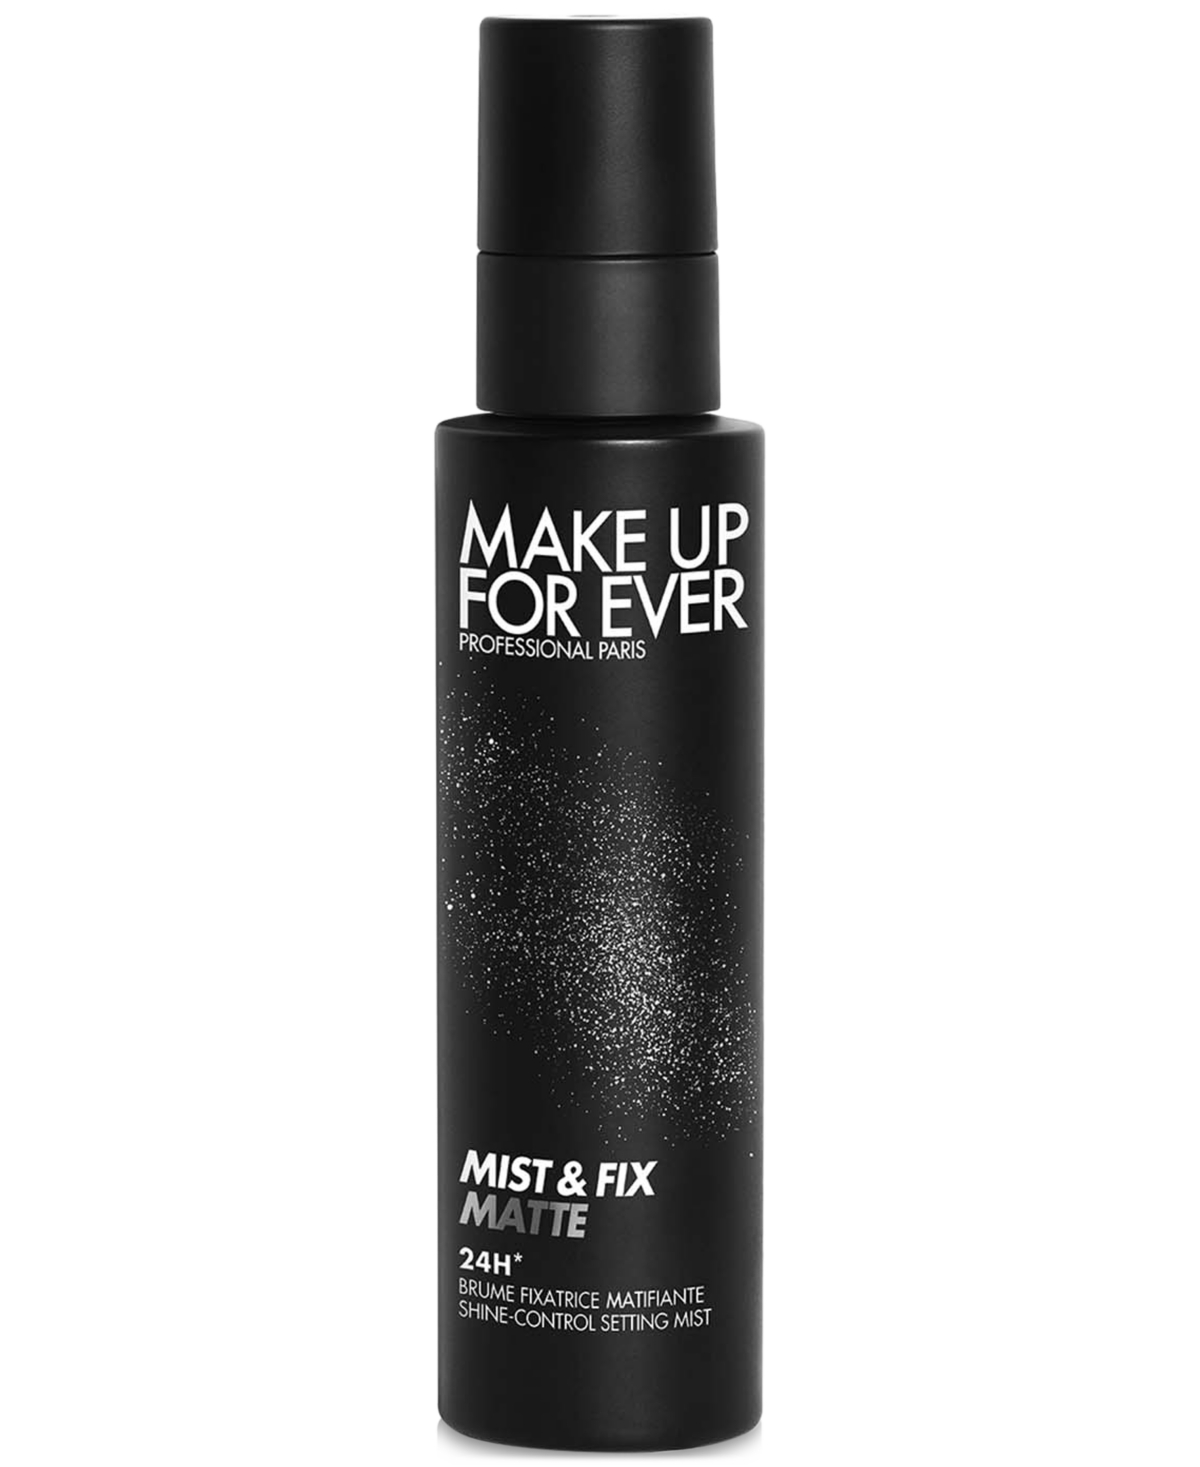 Make Up For Ever Mist & Fix Matte 24H Shine-Control Setting Mist, 3.4 oz.